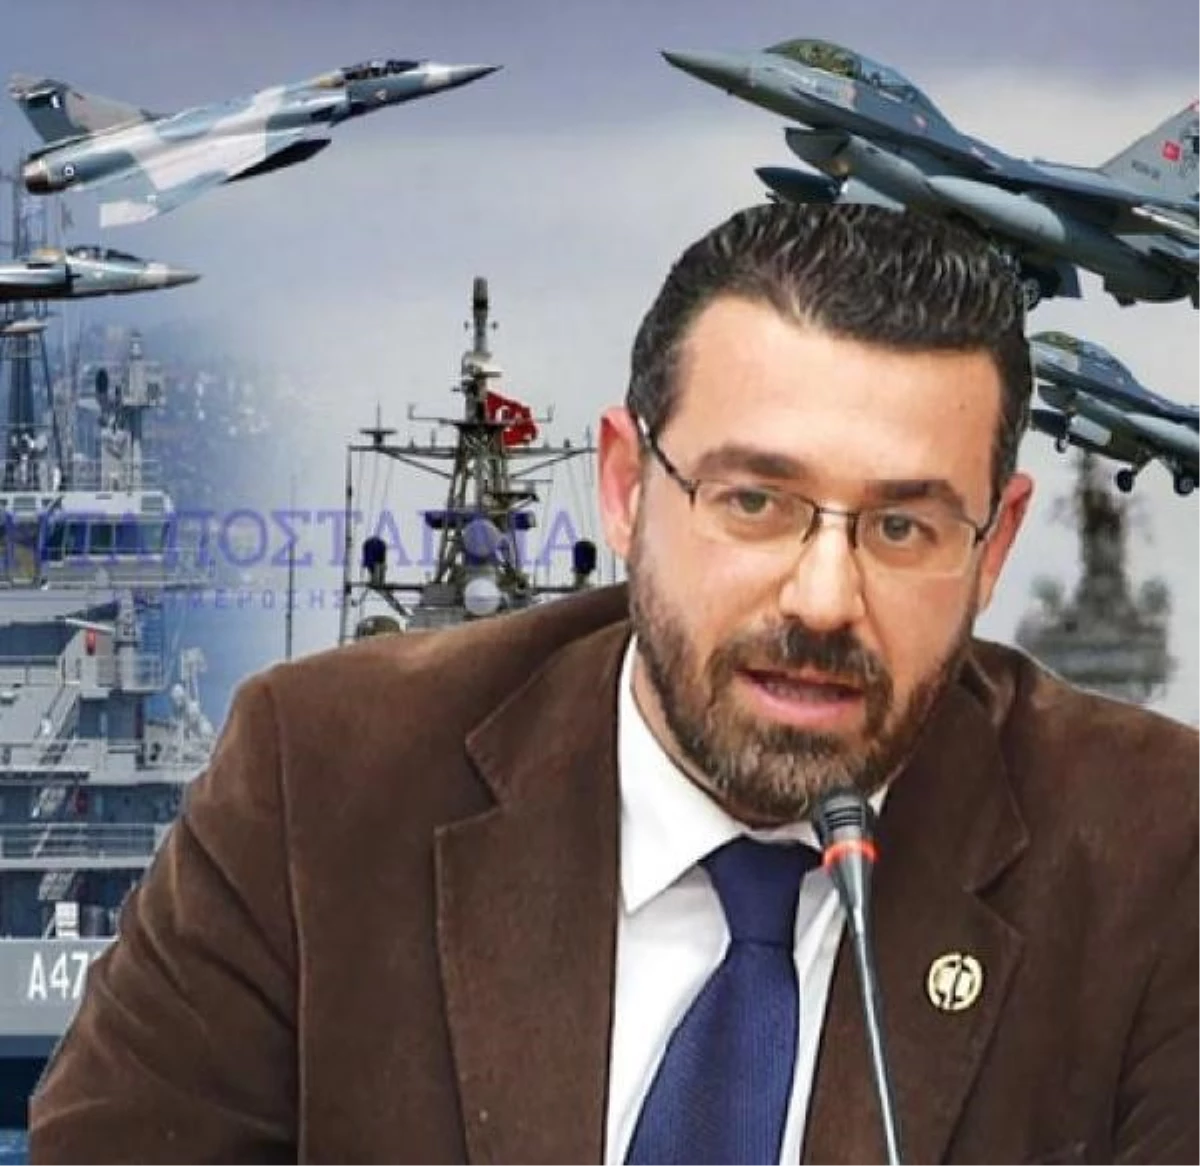 Greek Filis Geopolitical Security Expert: Η Τουρκία έχει δημιουργήσει τεράστια αμυντική βιομηχανία μετά από 40 χρόνια